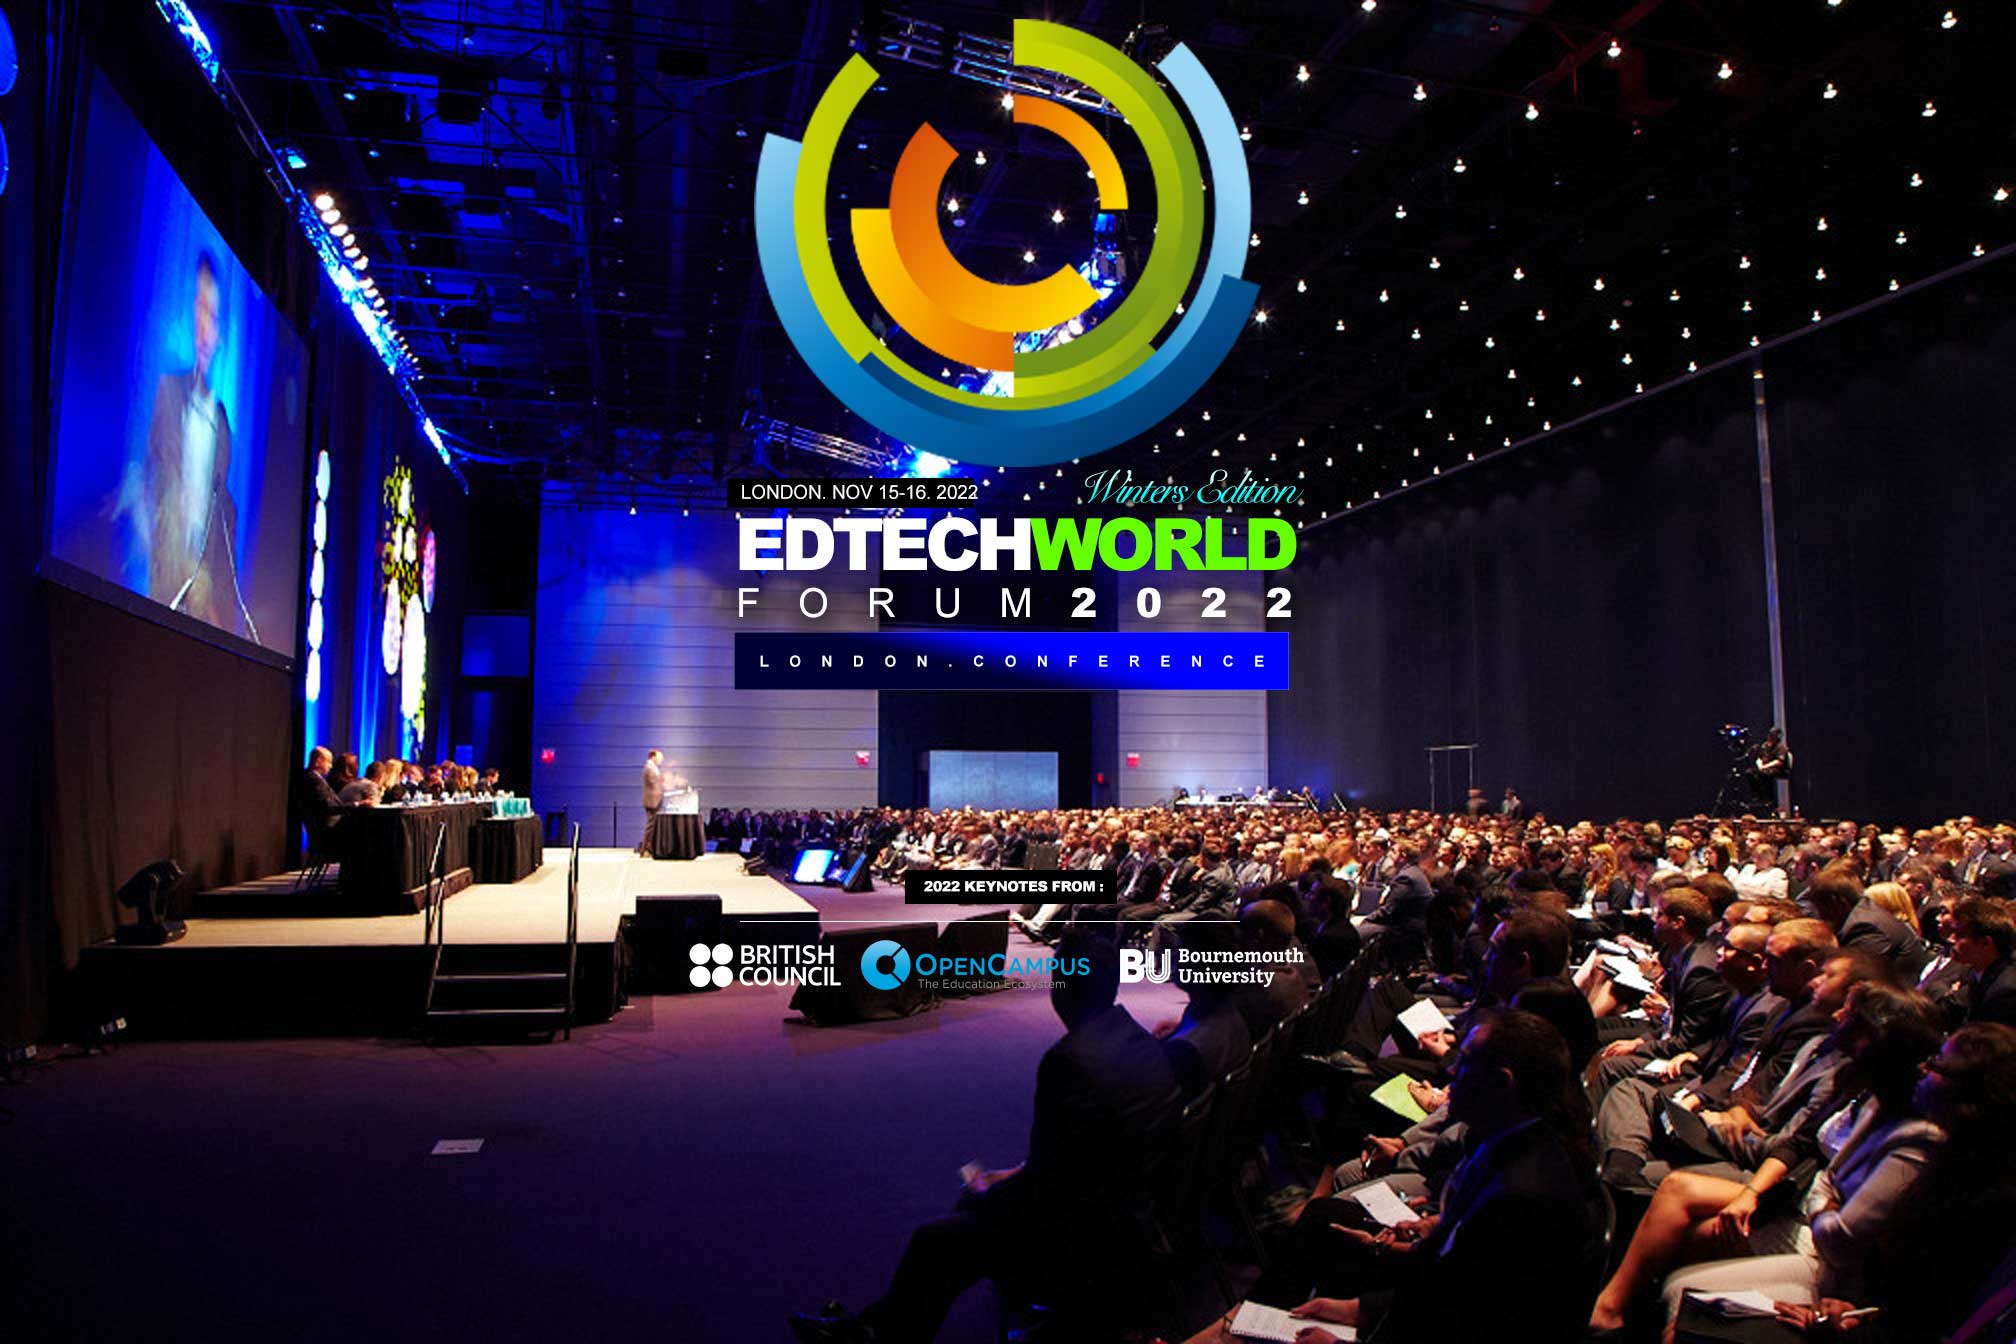 EdTech Conference - EdTech World Forum 2022 - Education Conference London